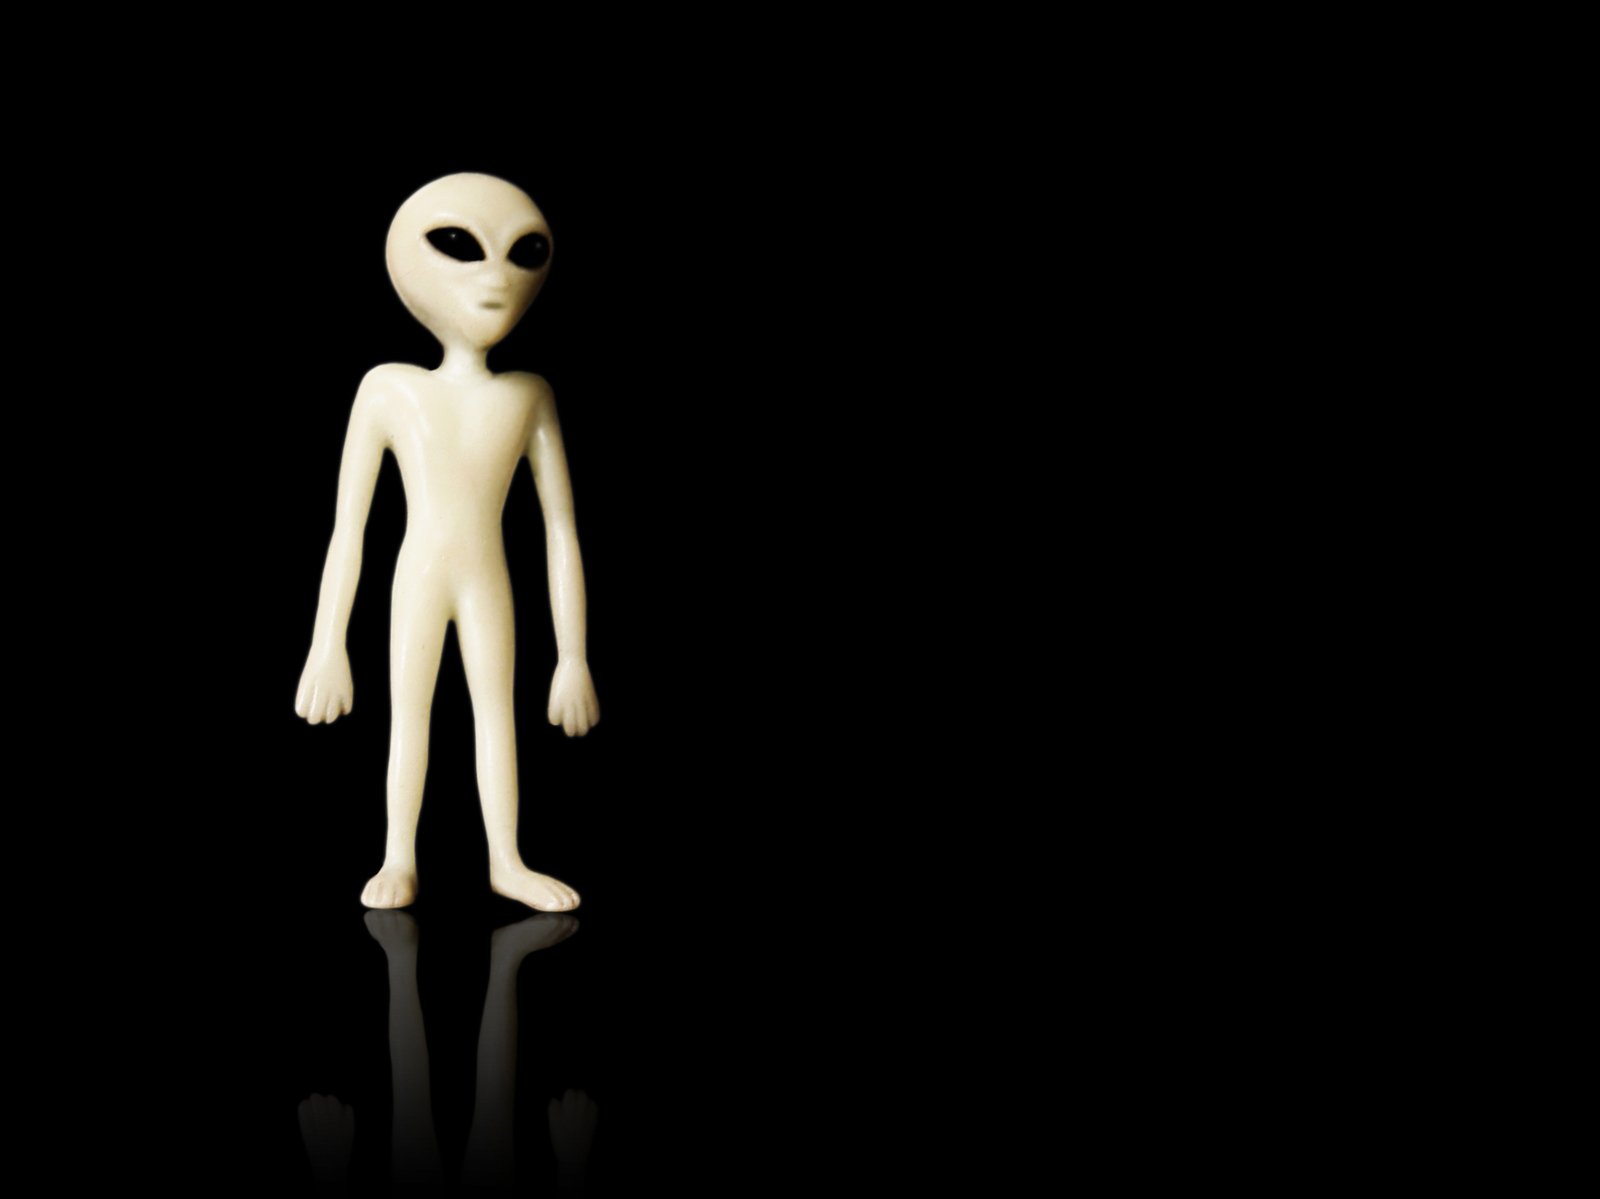 a white alien doll standing in the dark